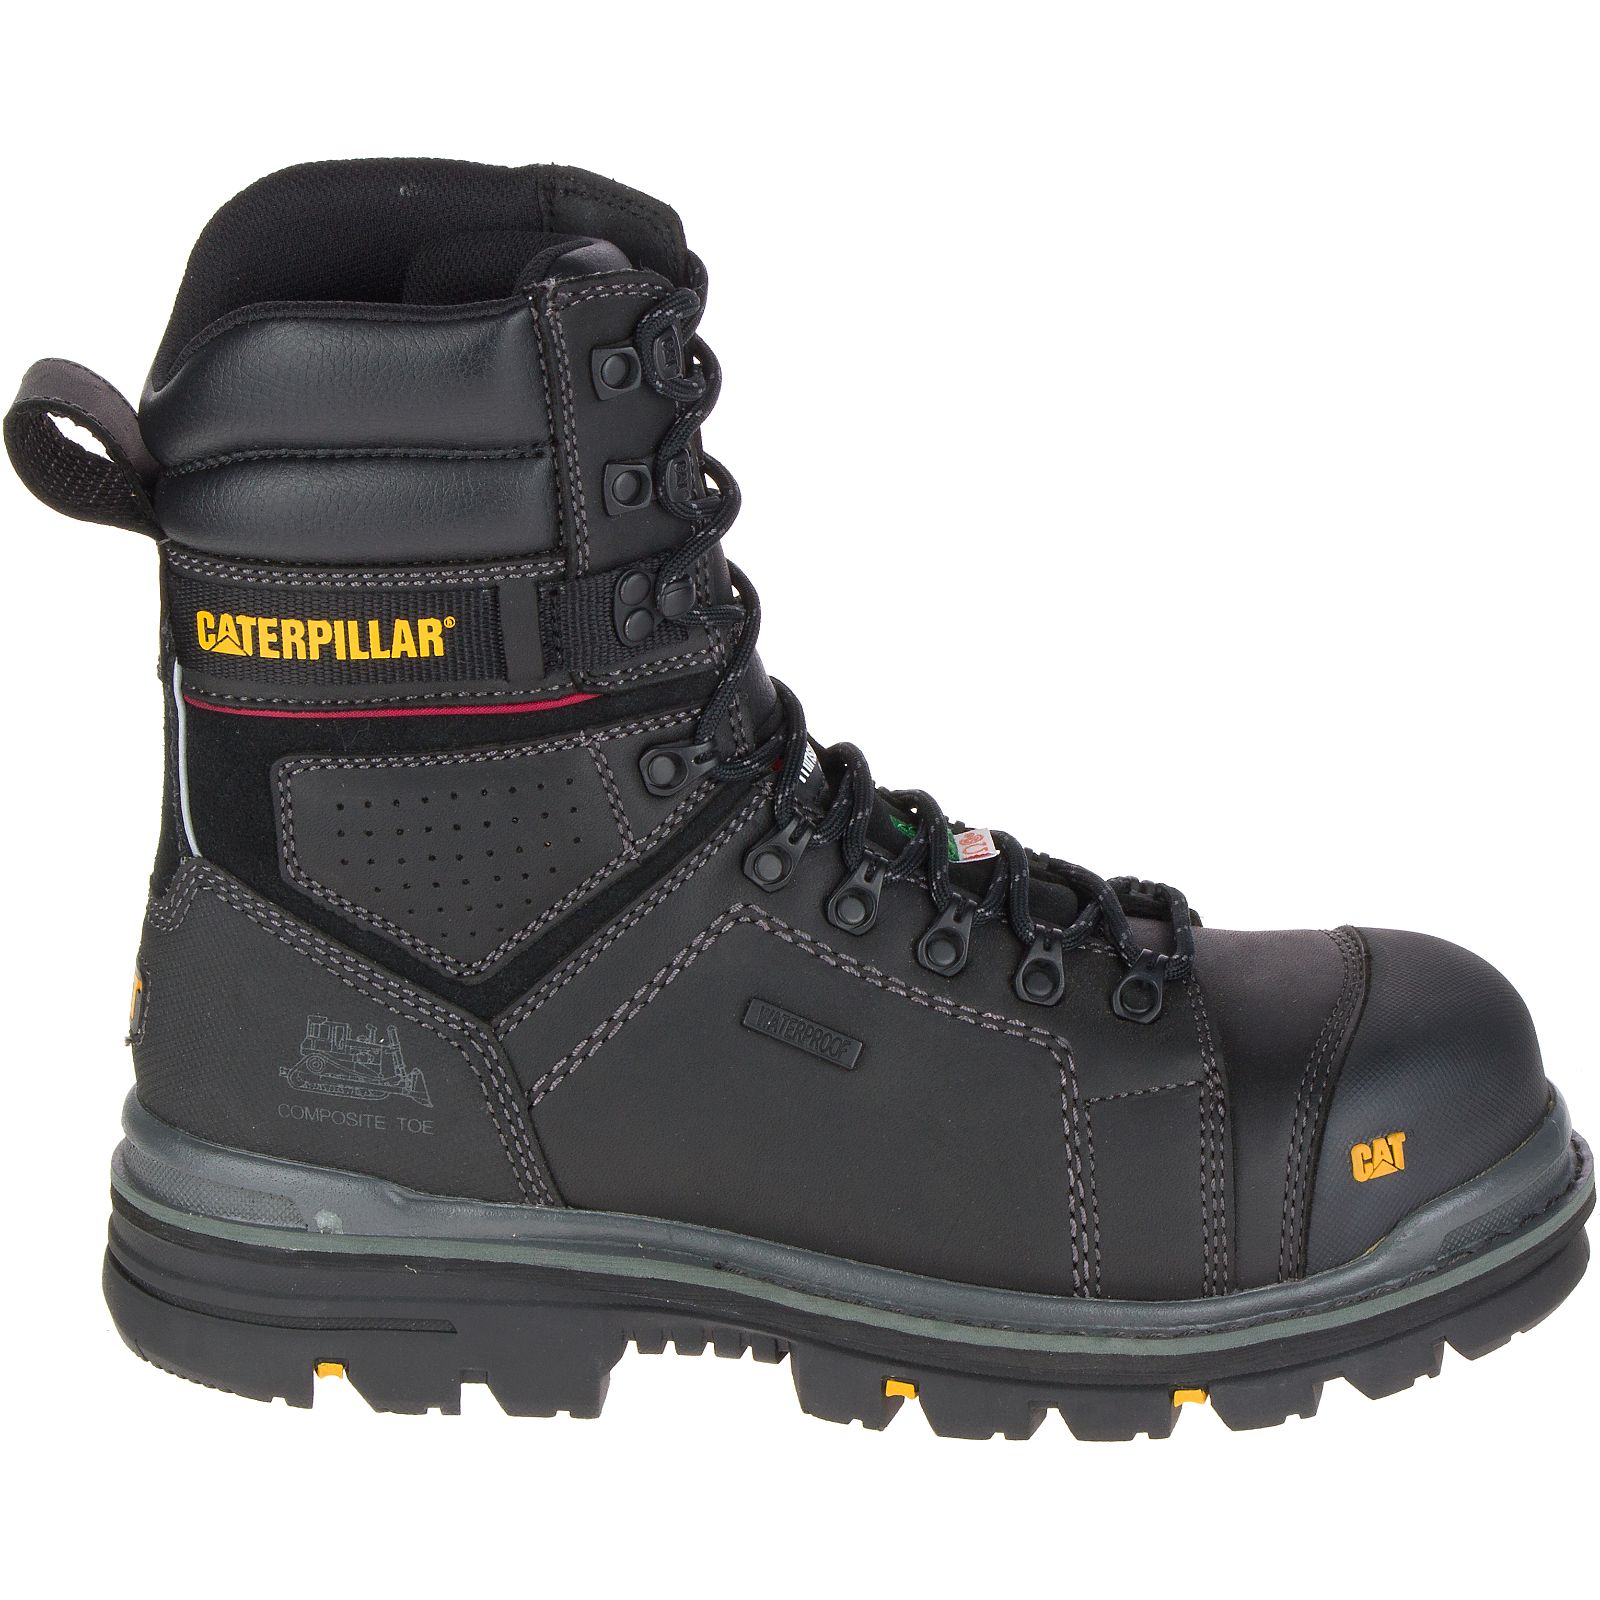 Caterpillar Work Boots Dubai - Caterpillar Hauler 8" Waterproof Composite Toe Csa Mens - Black HALVTG916